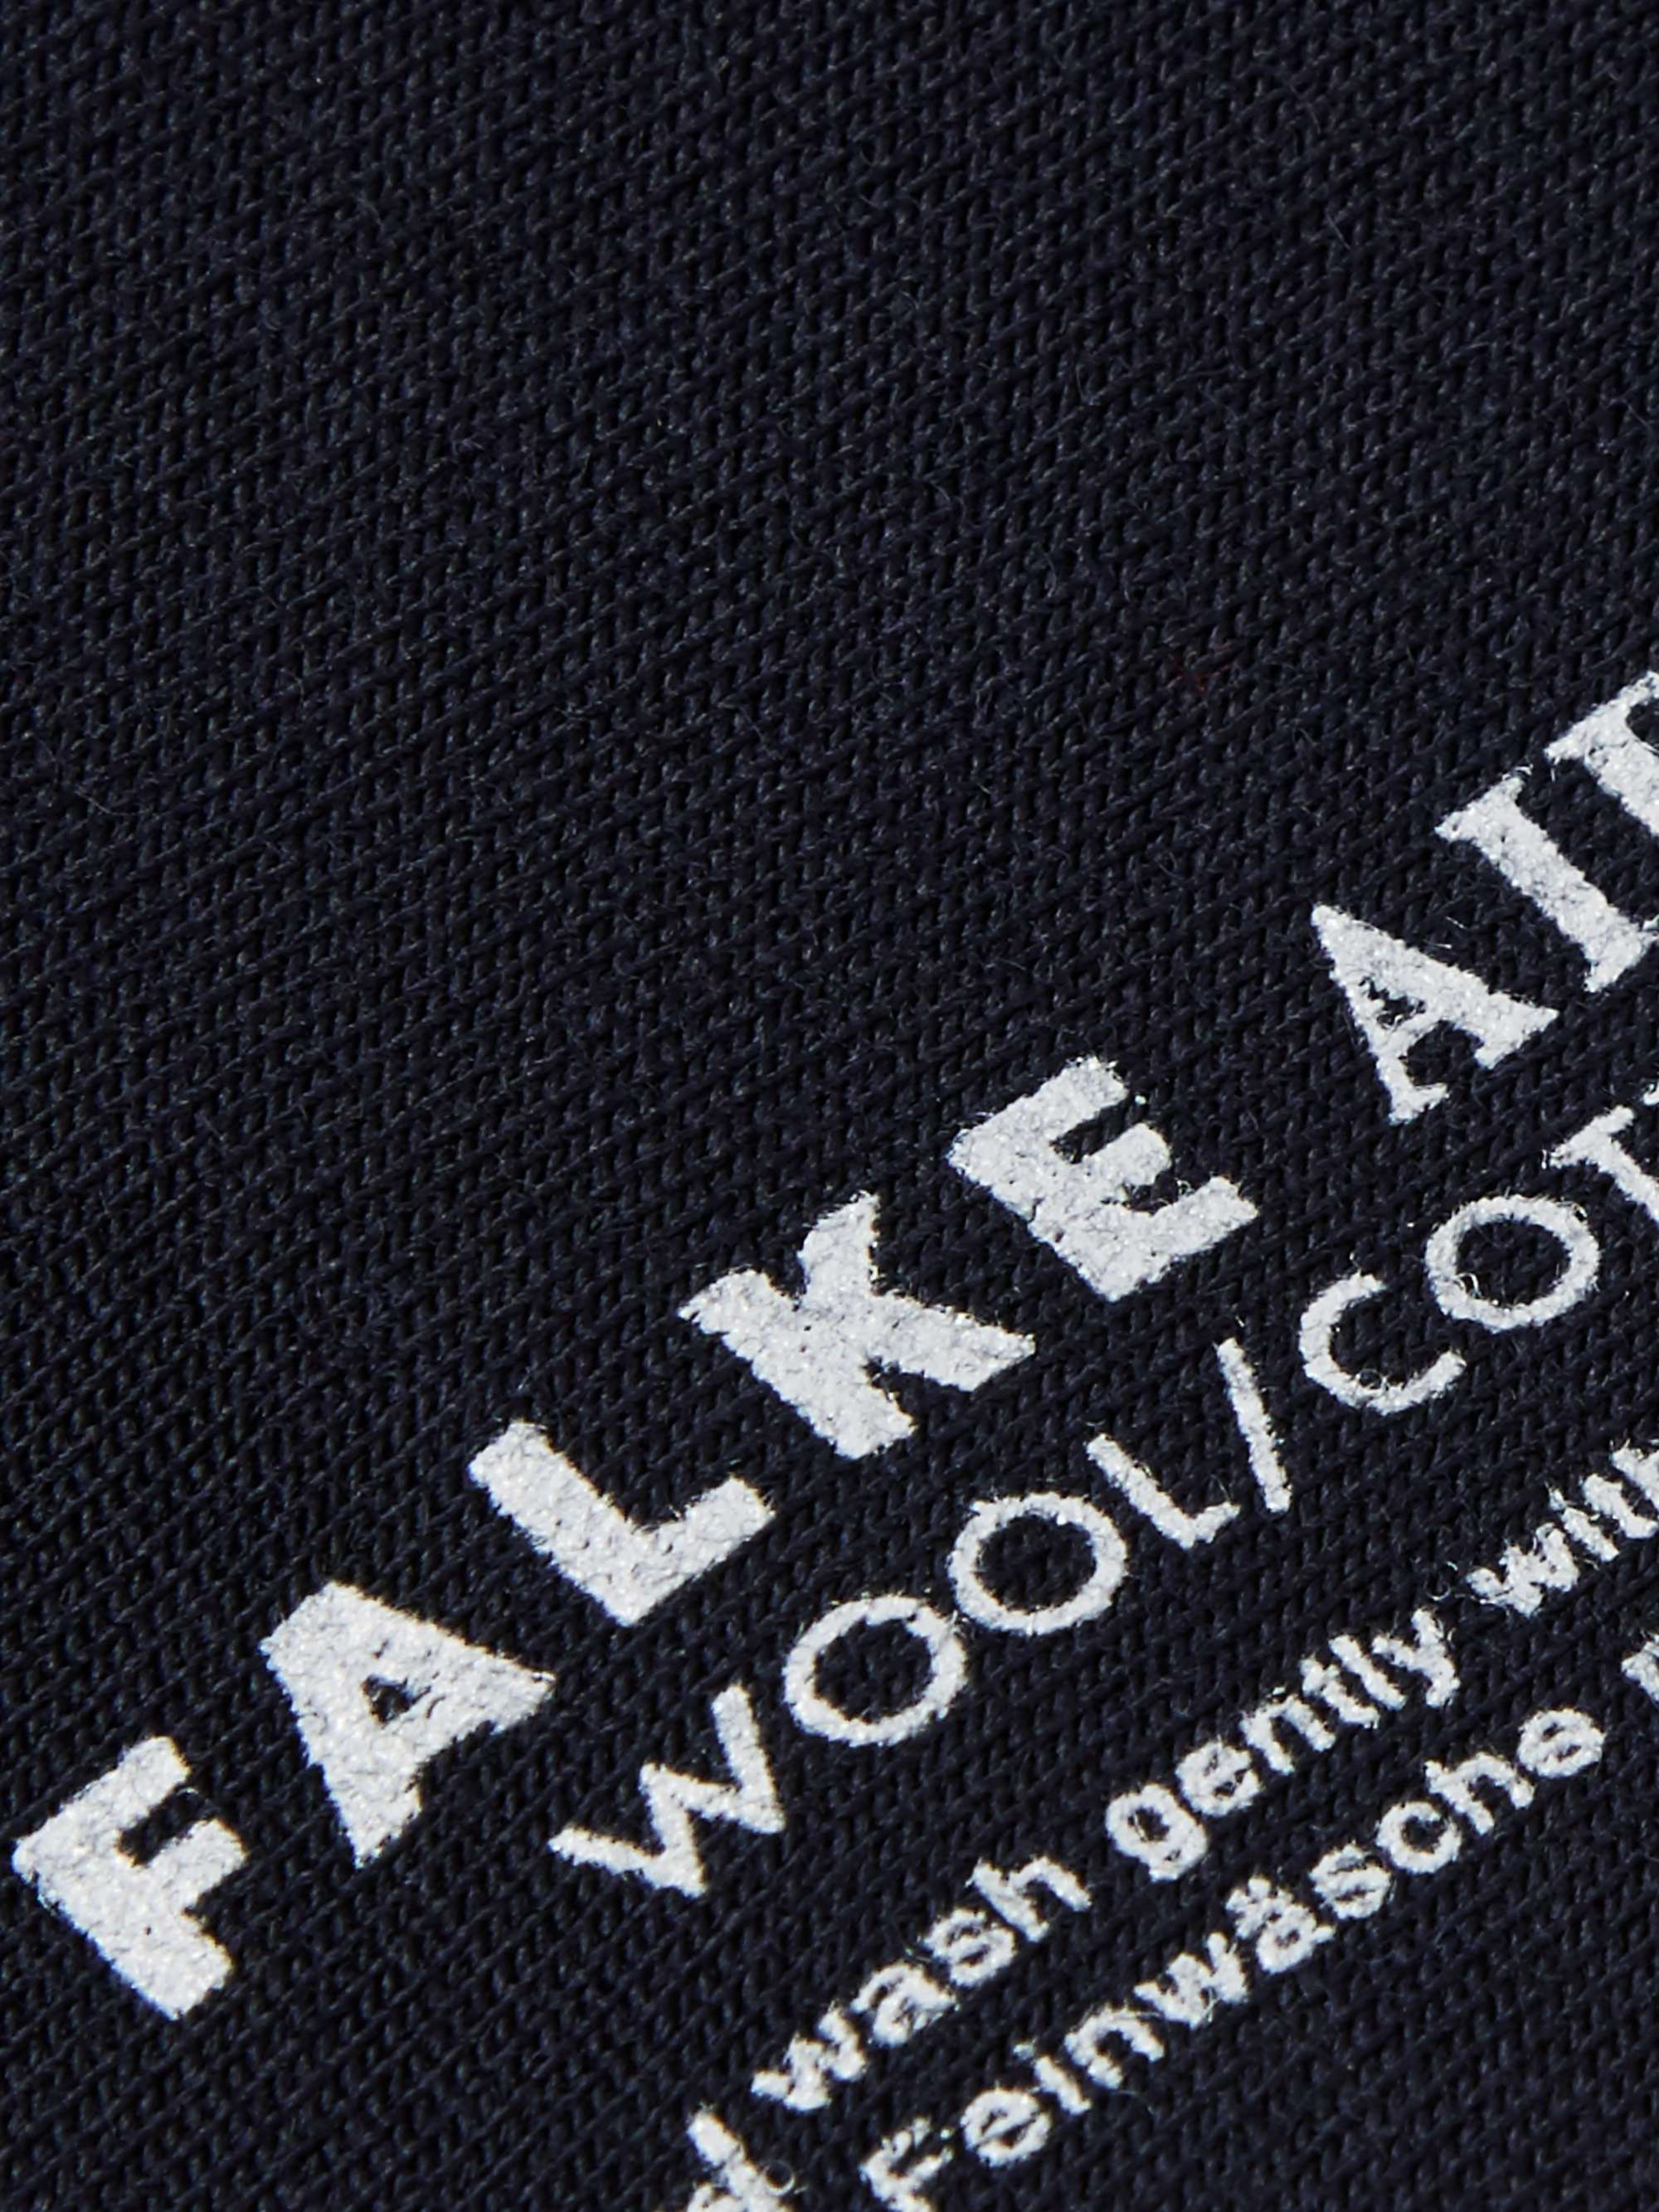 FALKE Three-Pack Airport Stretch Wool-Blend Socks